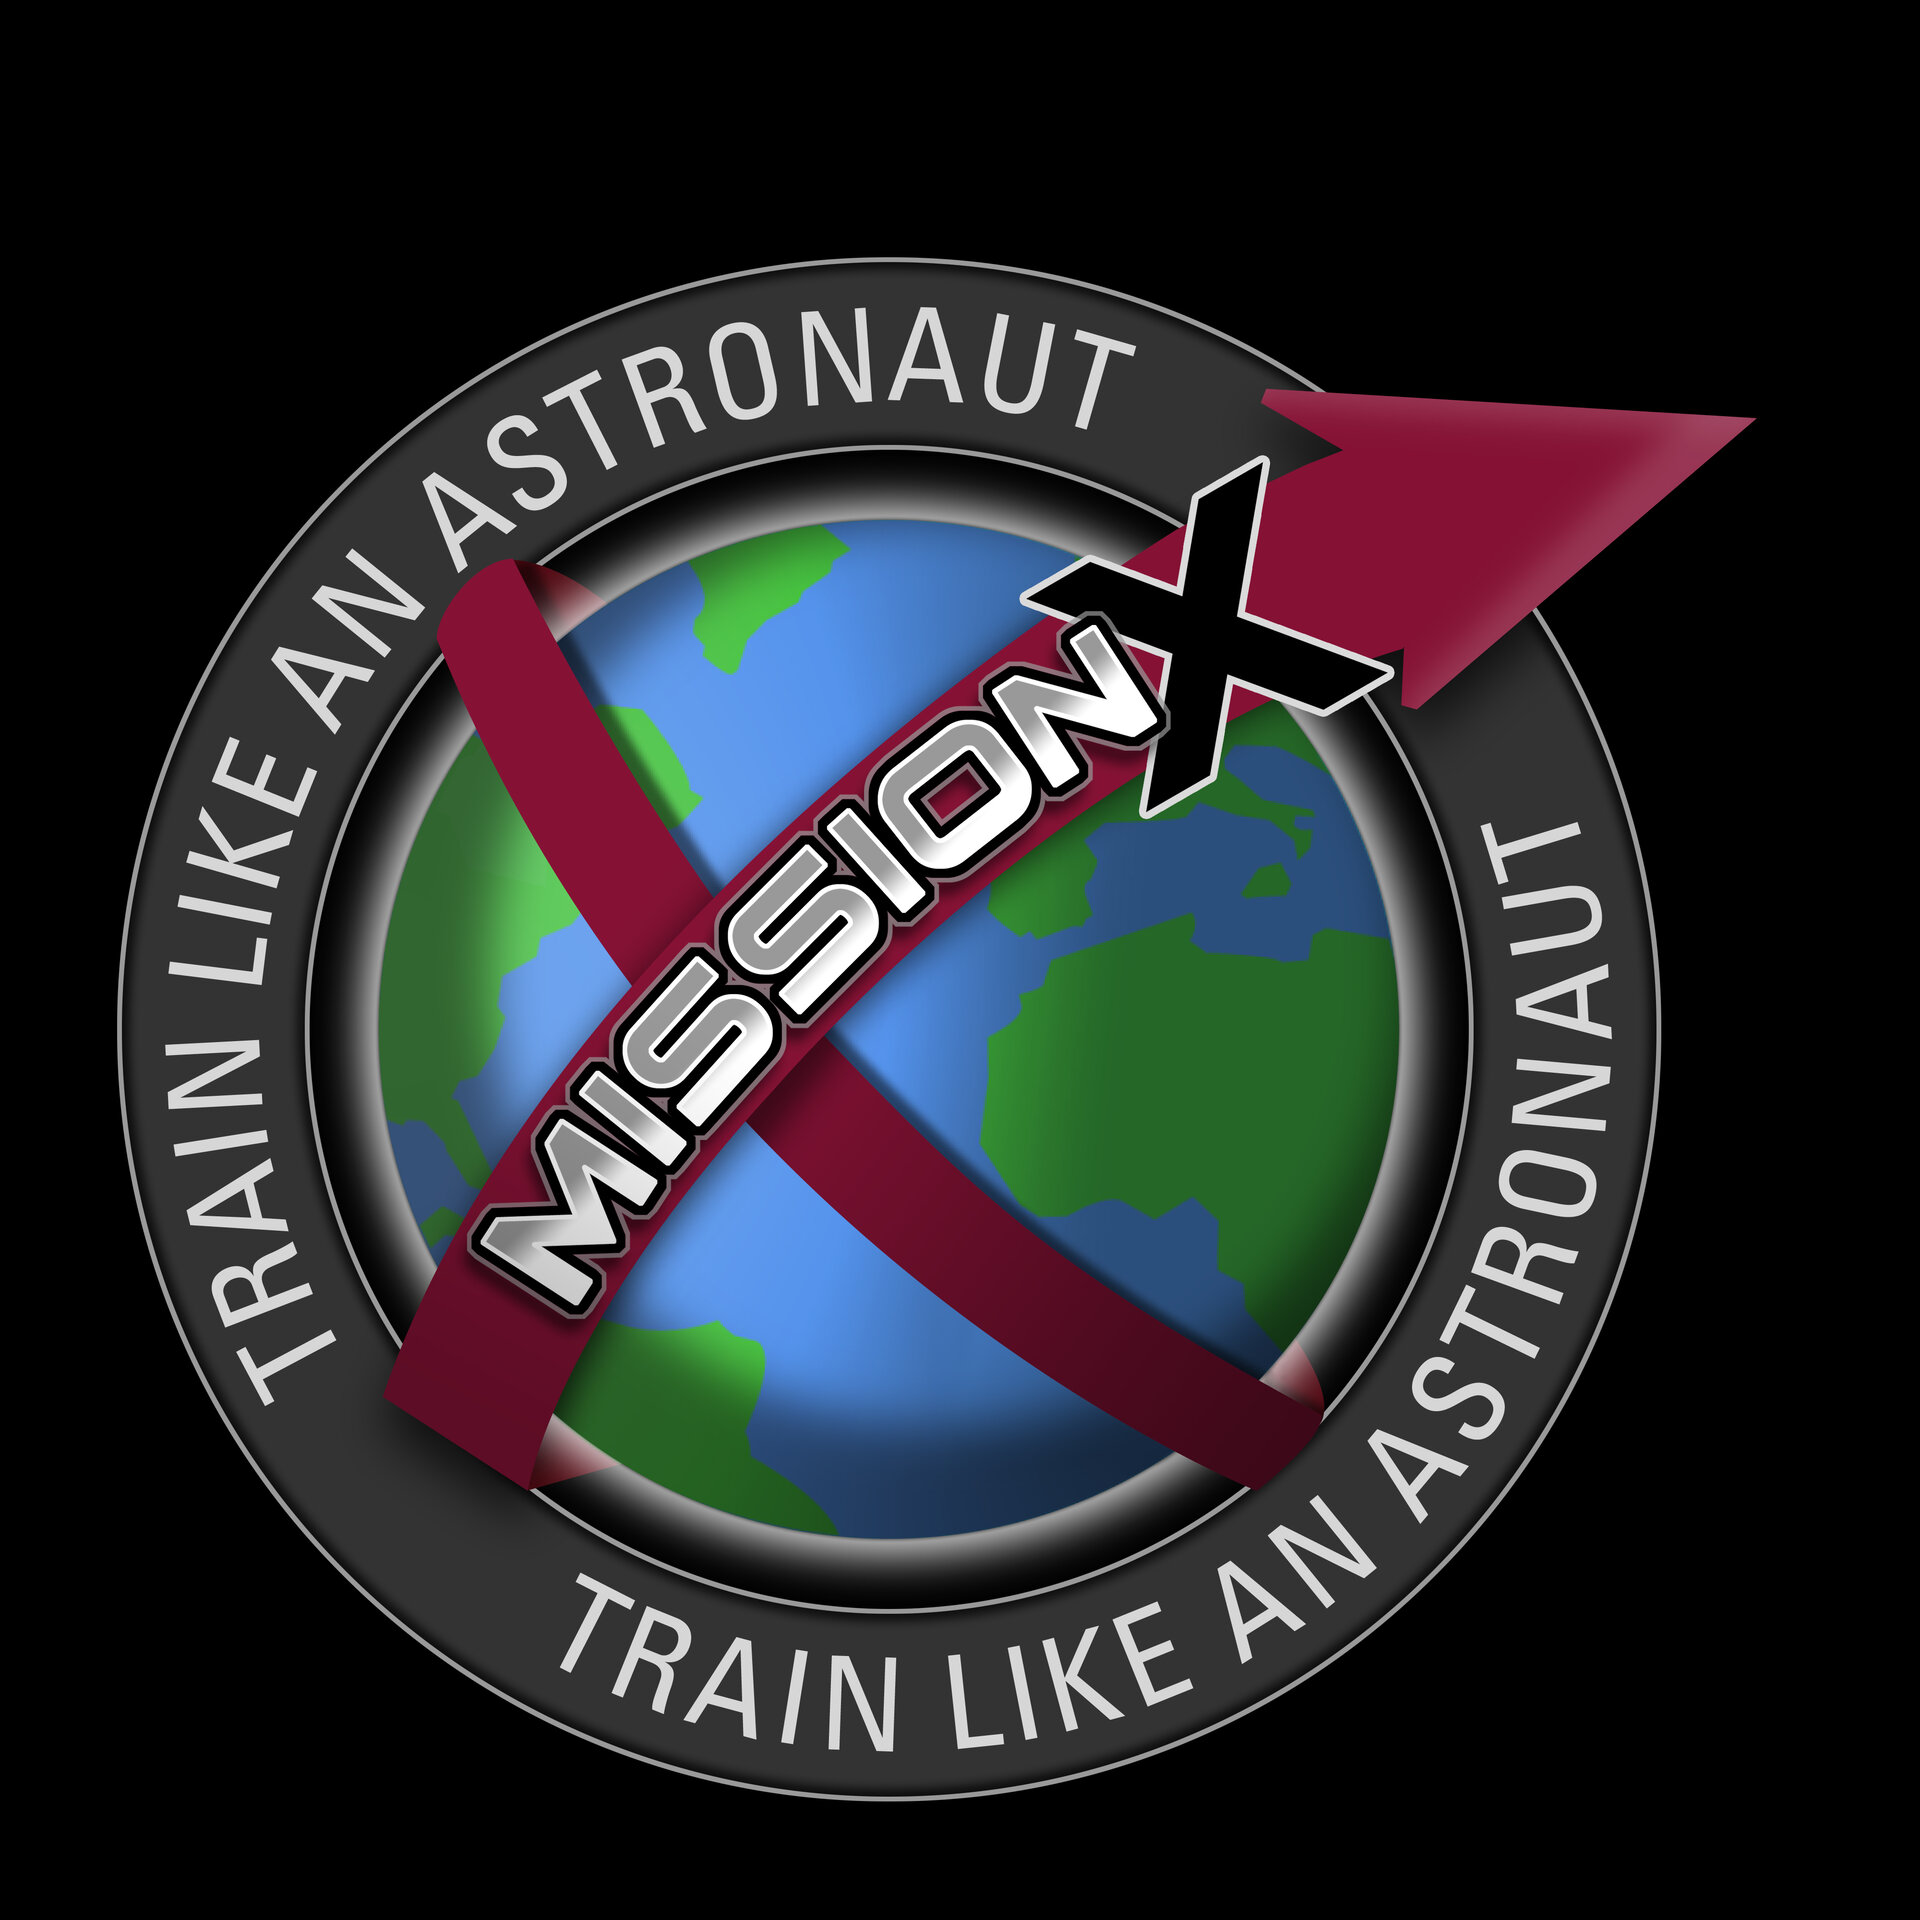 Mission X logo 2012